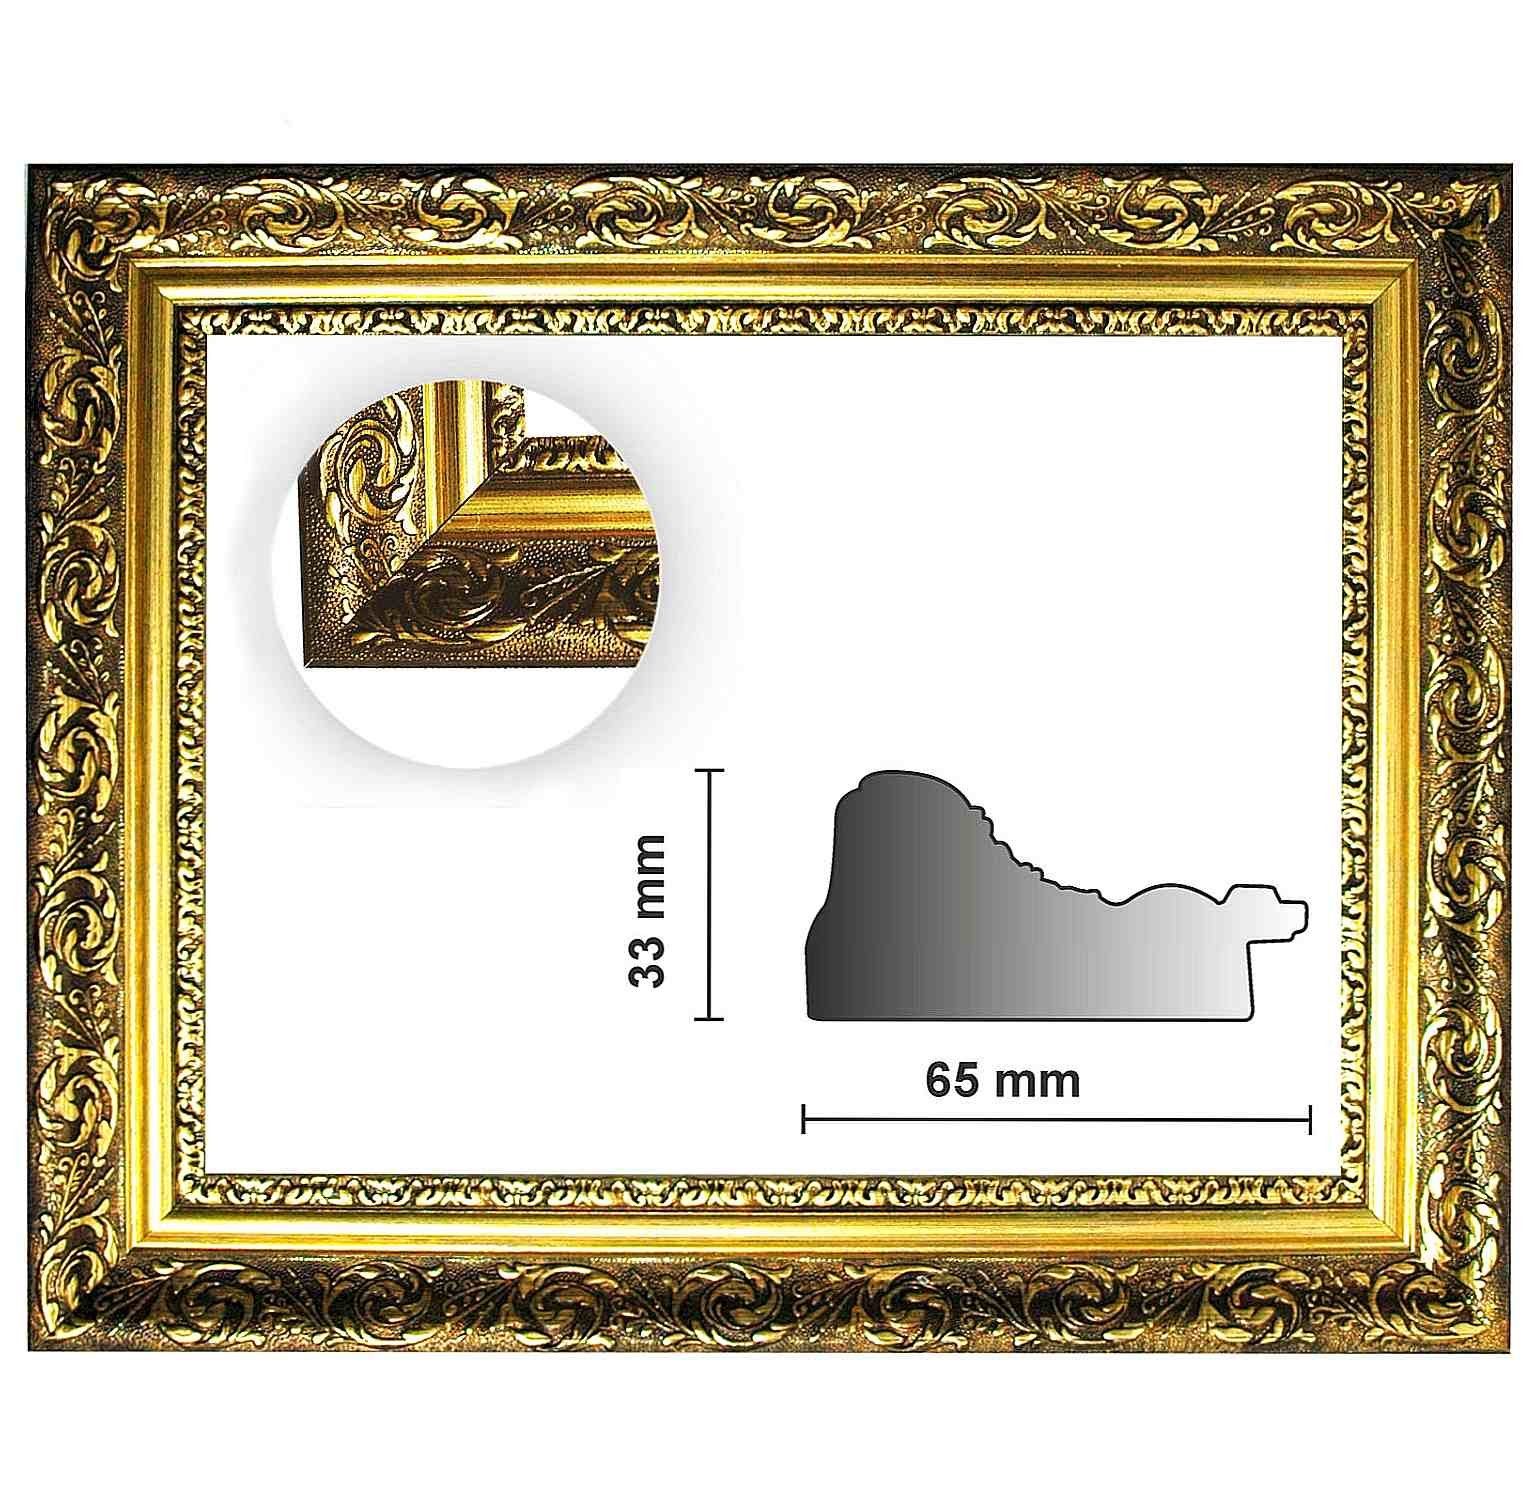 fein 840 Bilderrahmen Einzelrahmen Barockrahmen verziert verschiedene ORO, Varianten Neumann gold